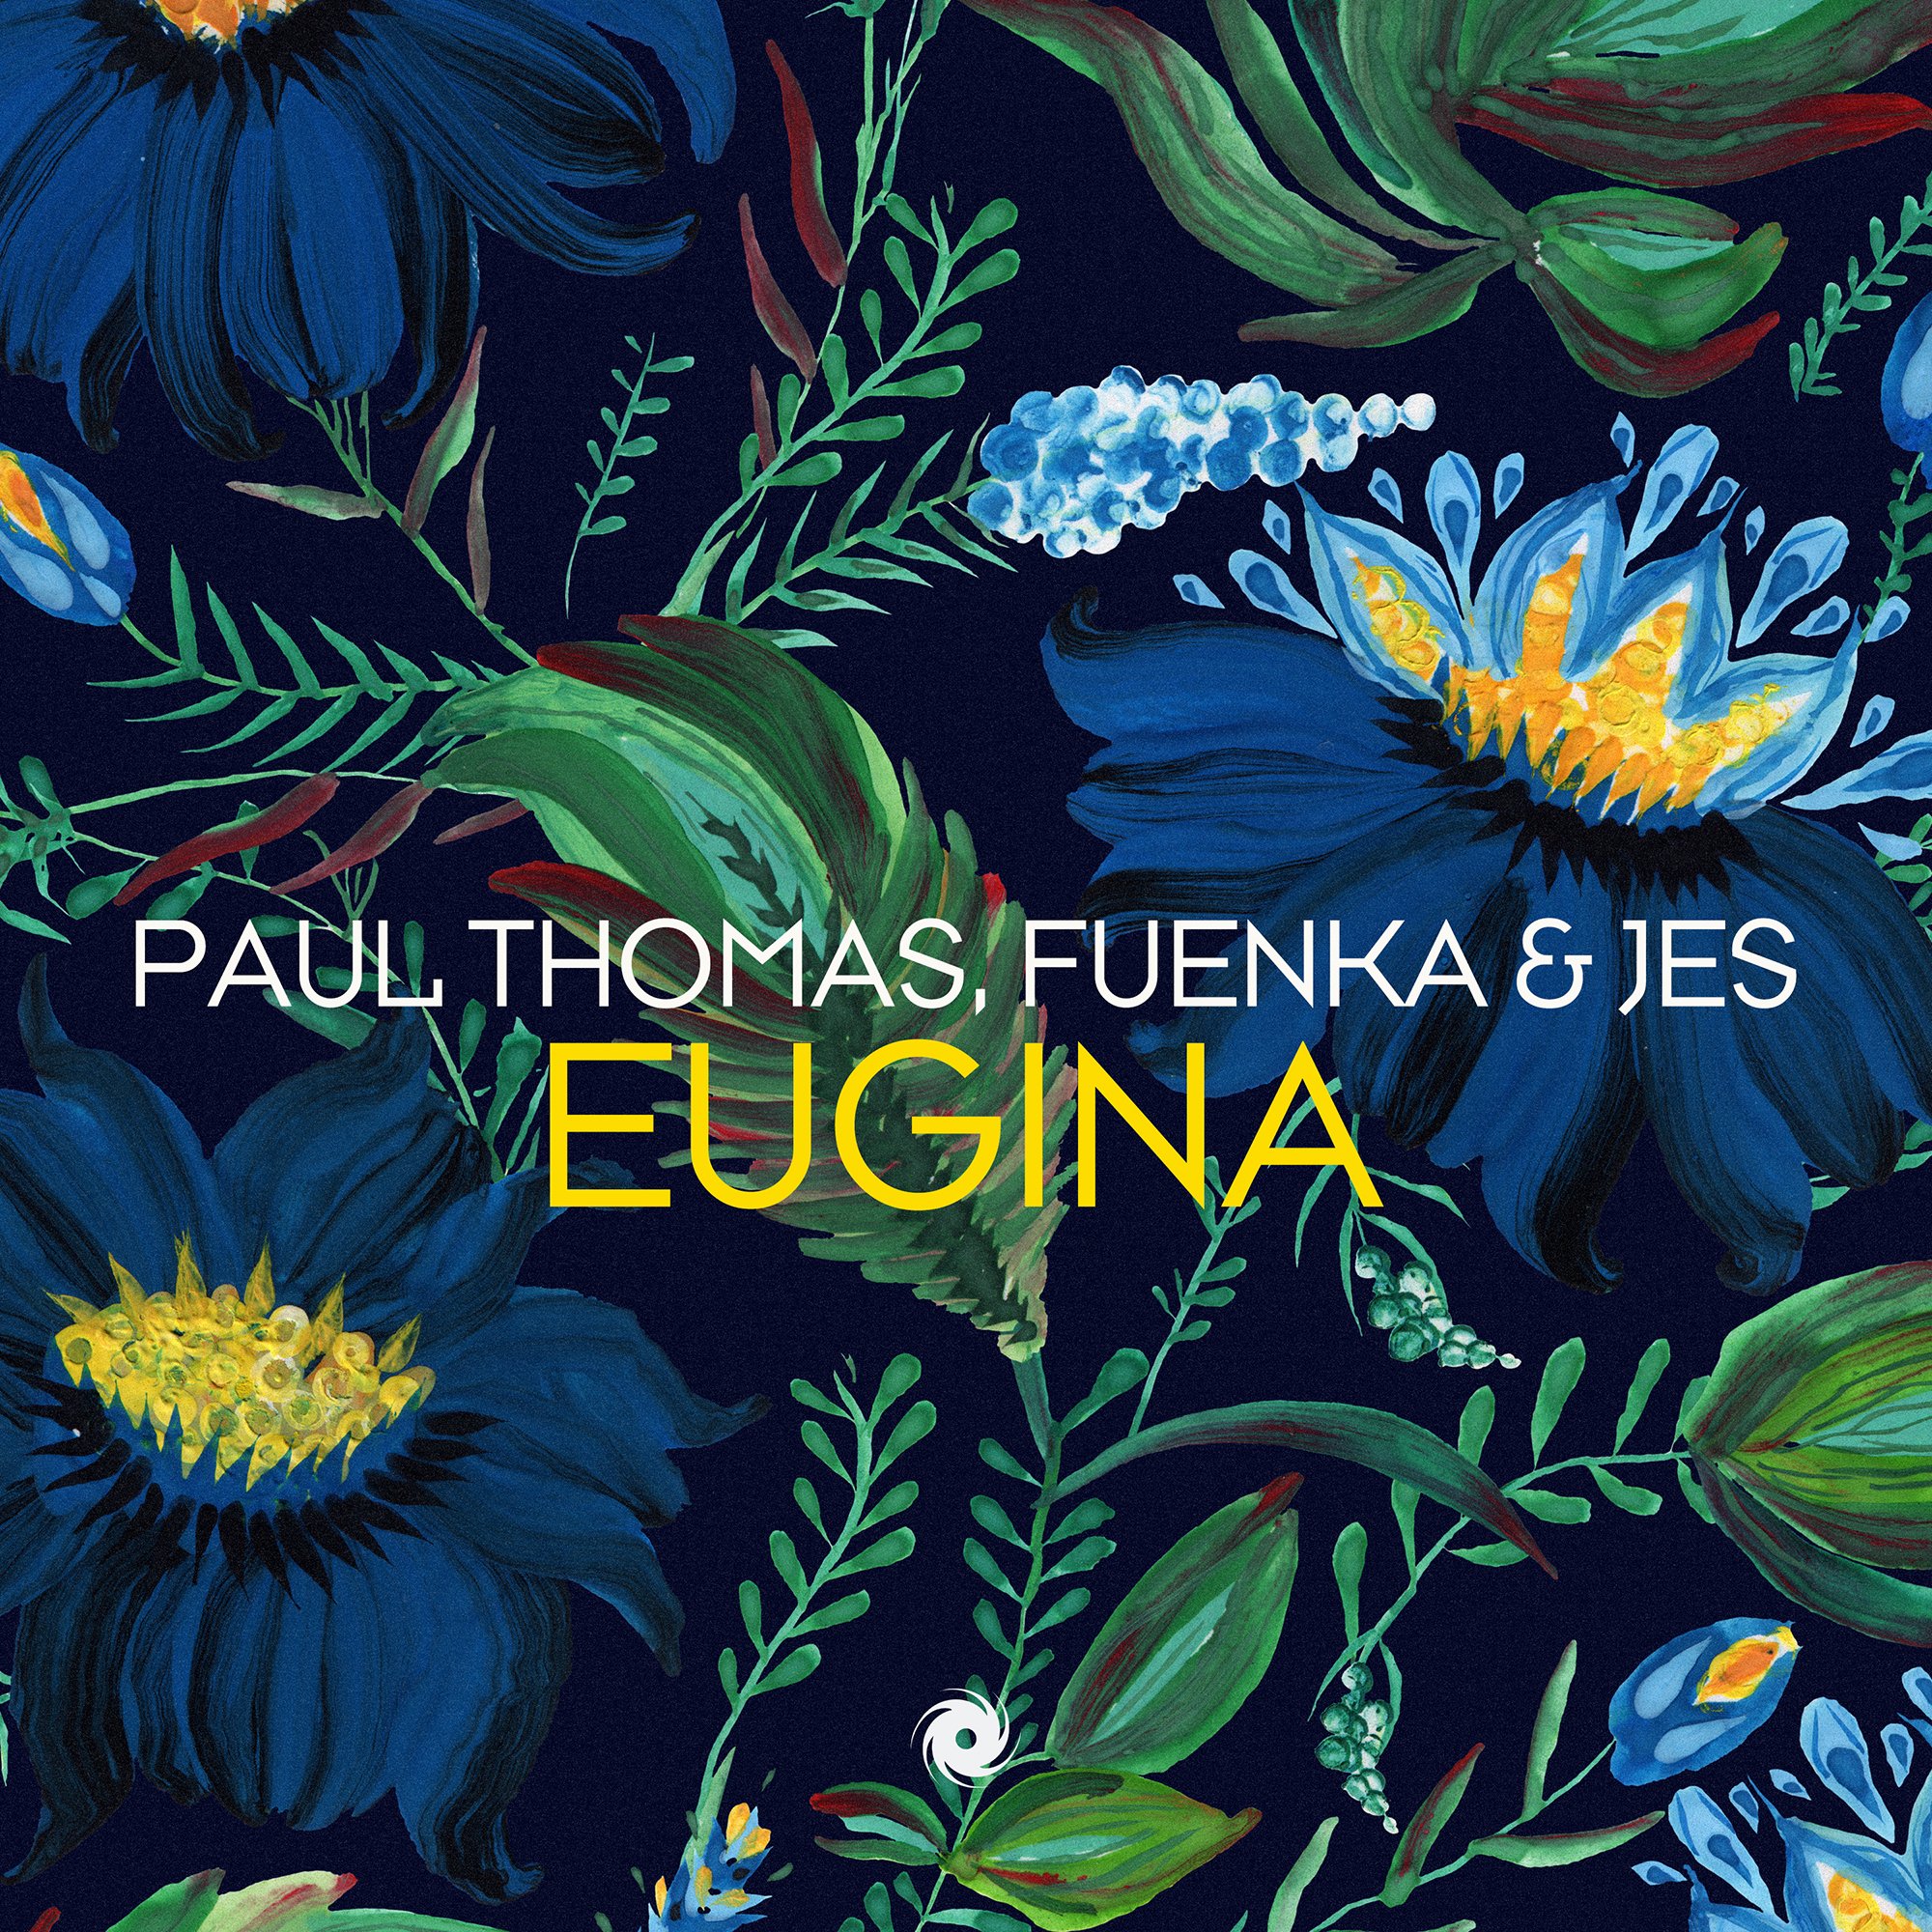 Paul Thomas, Fuenka and JES presents Eugina on Black Hole Recordings